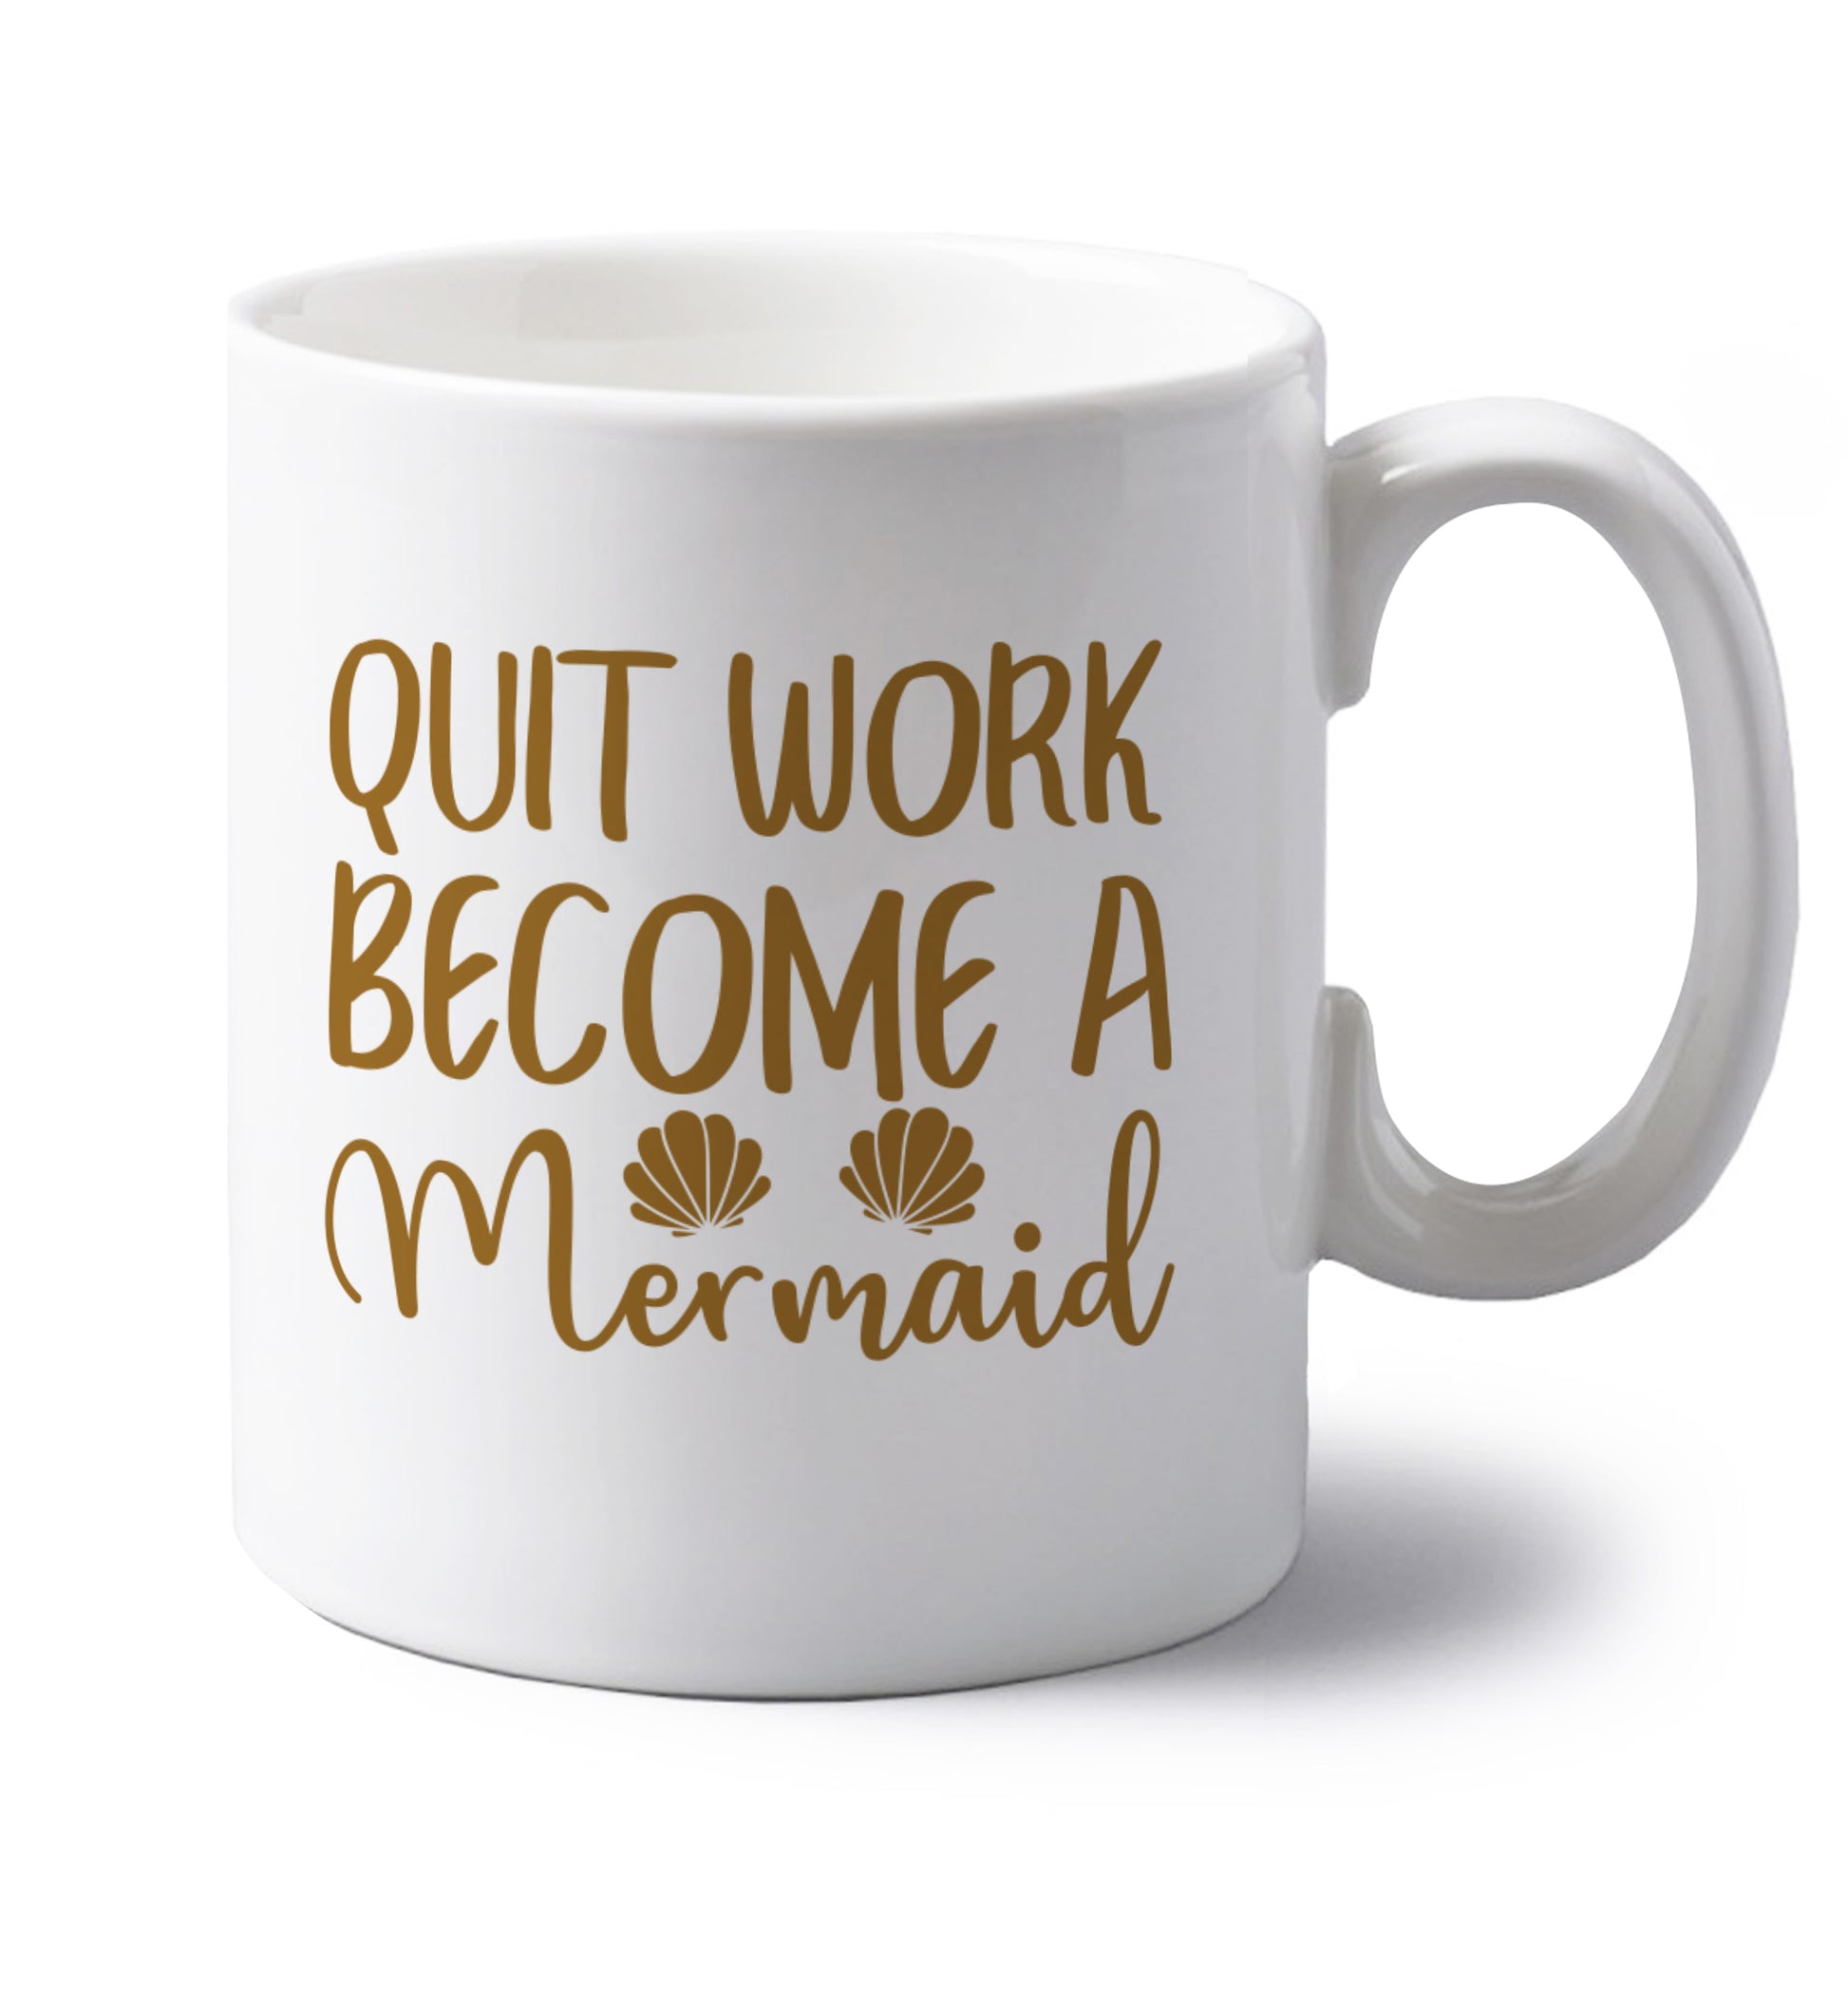 Quit work become a mermaid left handed white ceramic mug 